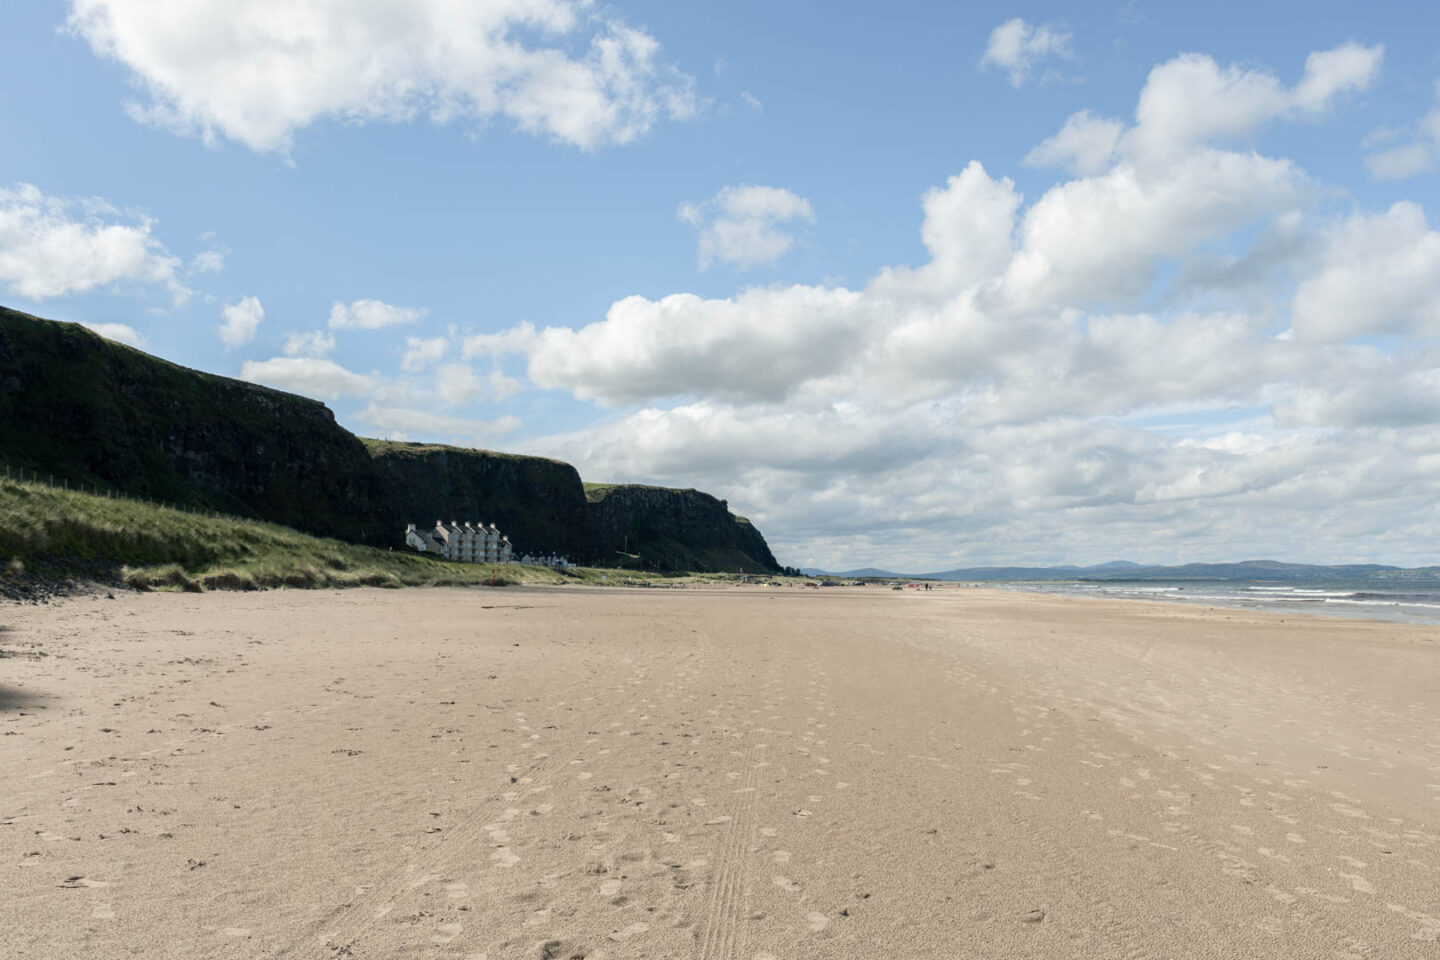 Benone beach, Northern Ireland